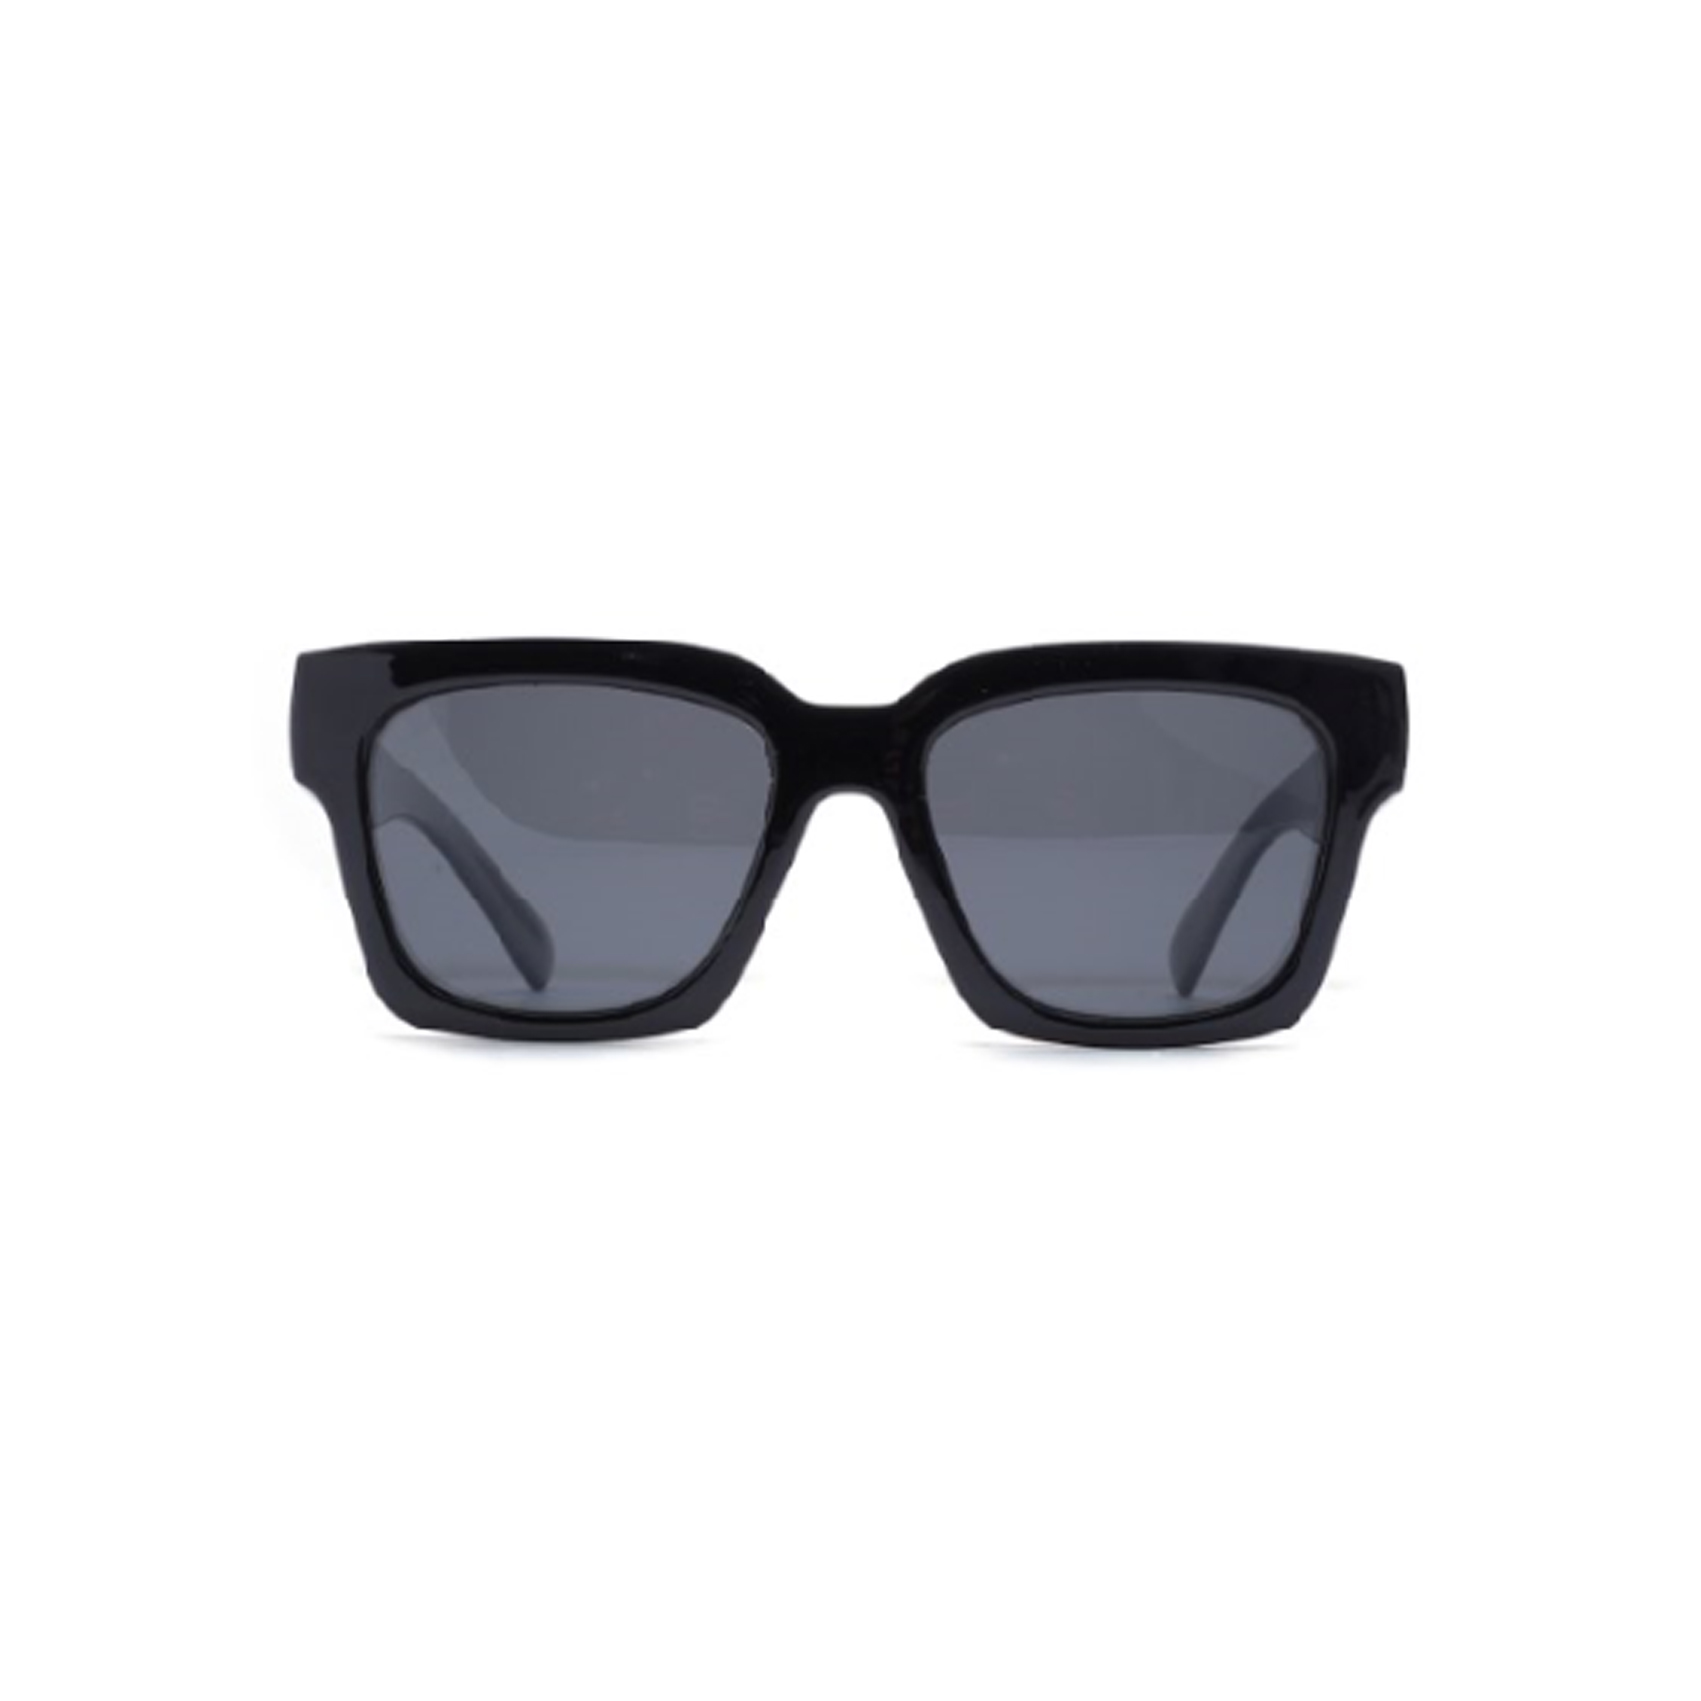 Classic Retro Black Squared Sunglasses	Brand Sunglasses Wholesale